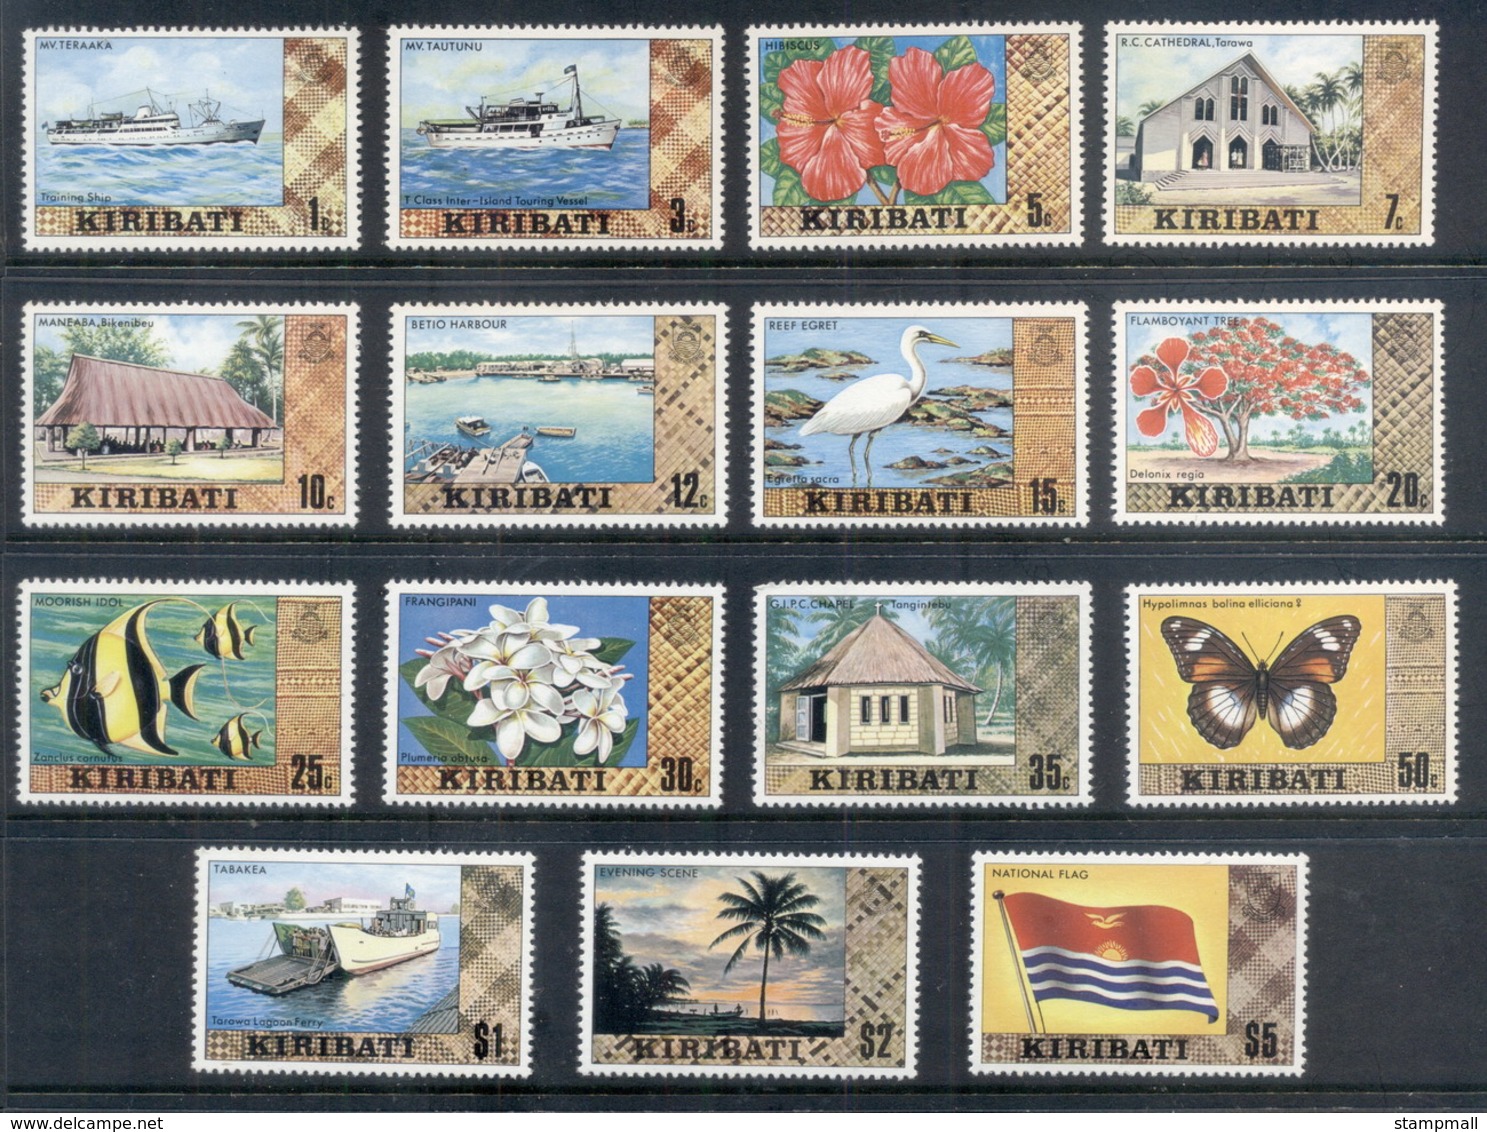 Kiribati 1980-81 Pictorials, No Wmk MUH - Kiribati (1979-...)